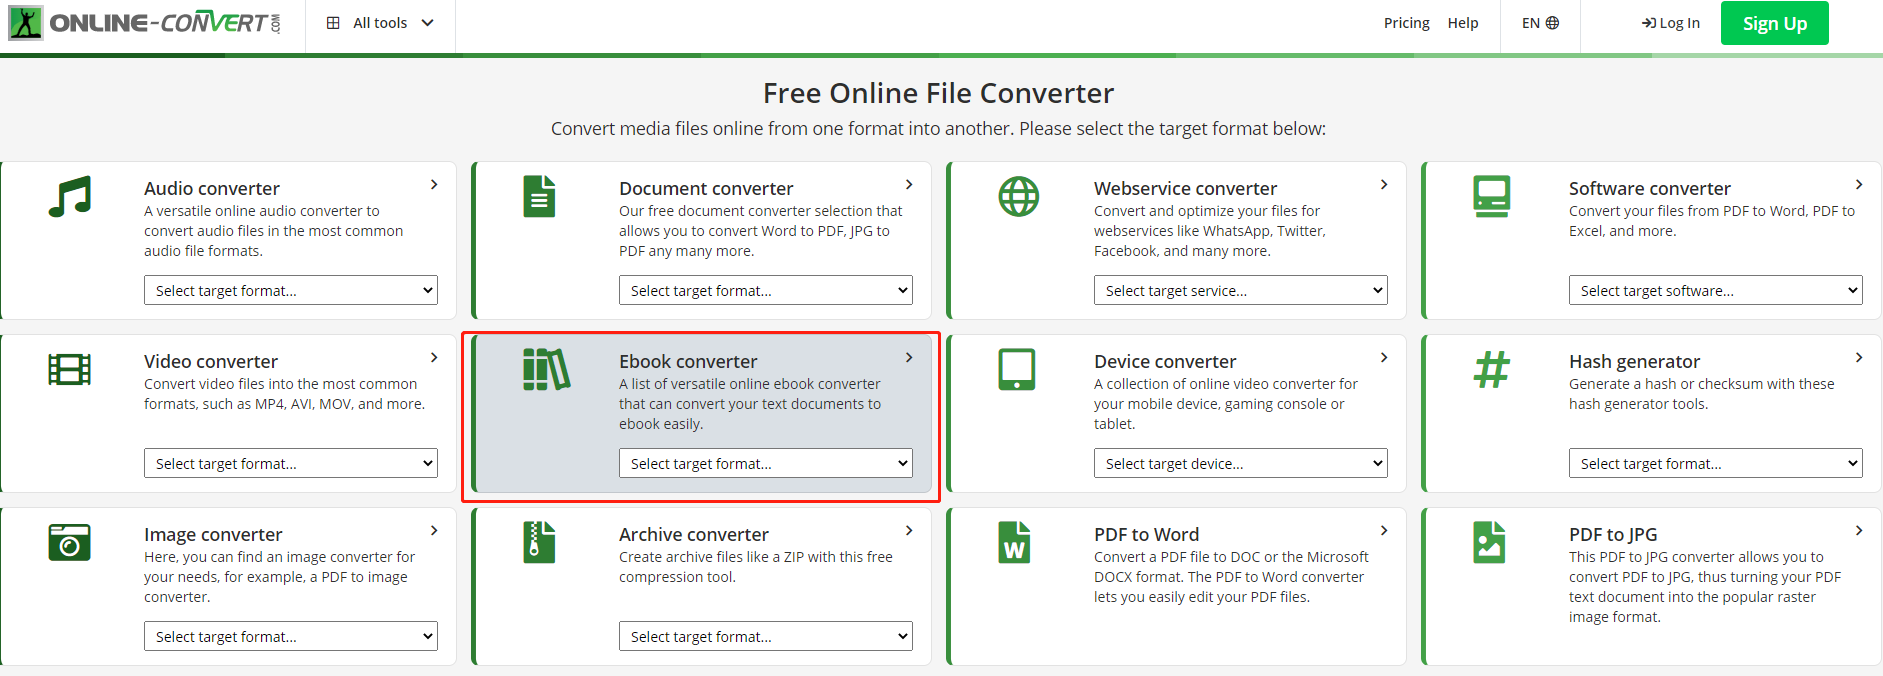 convert-pdf-to-kindle-onlineconvert.com